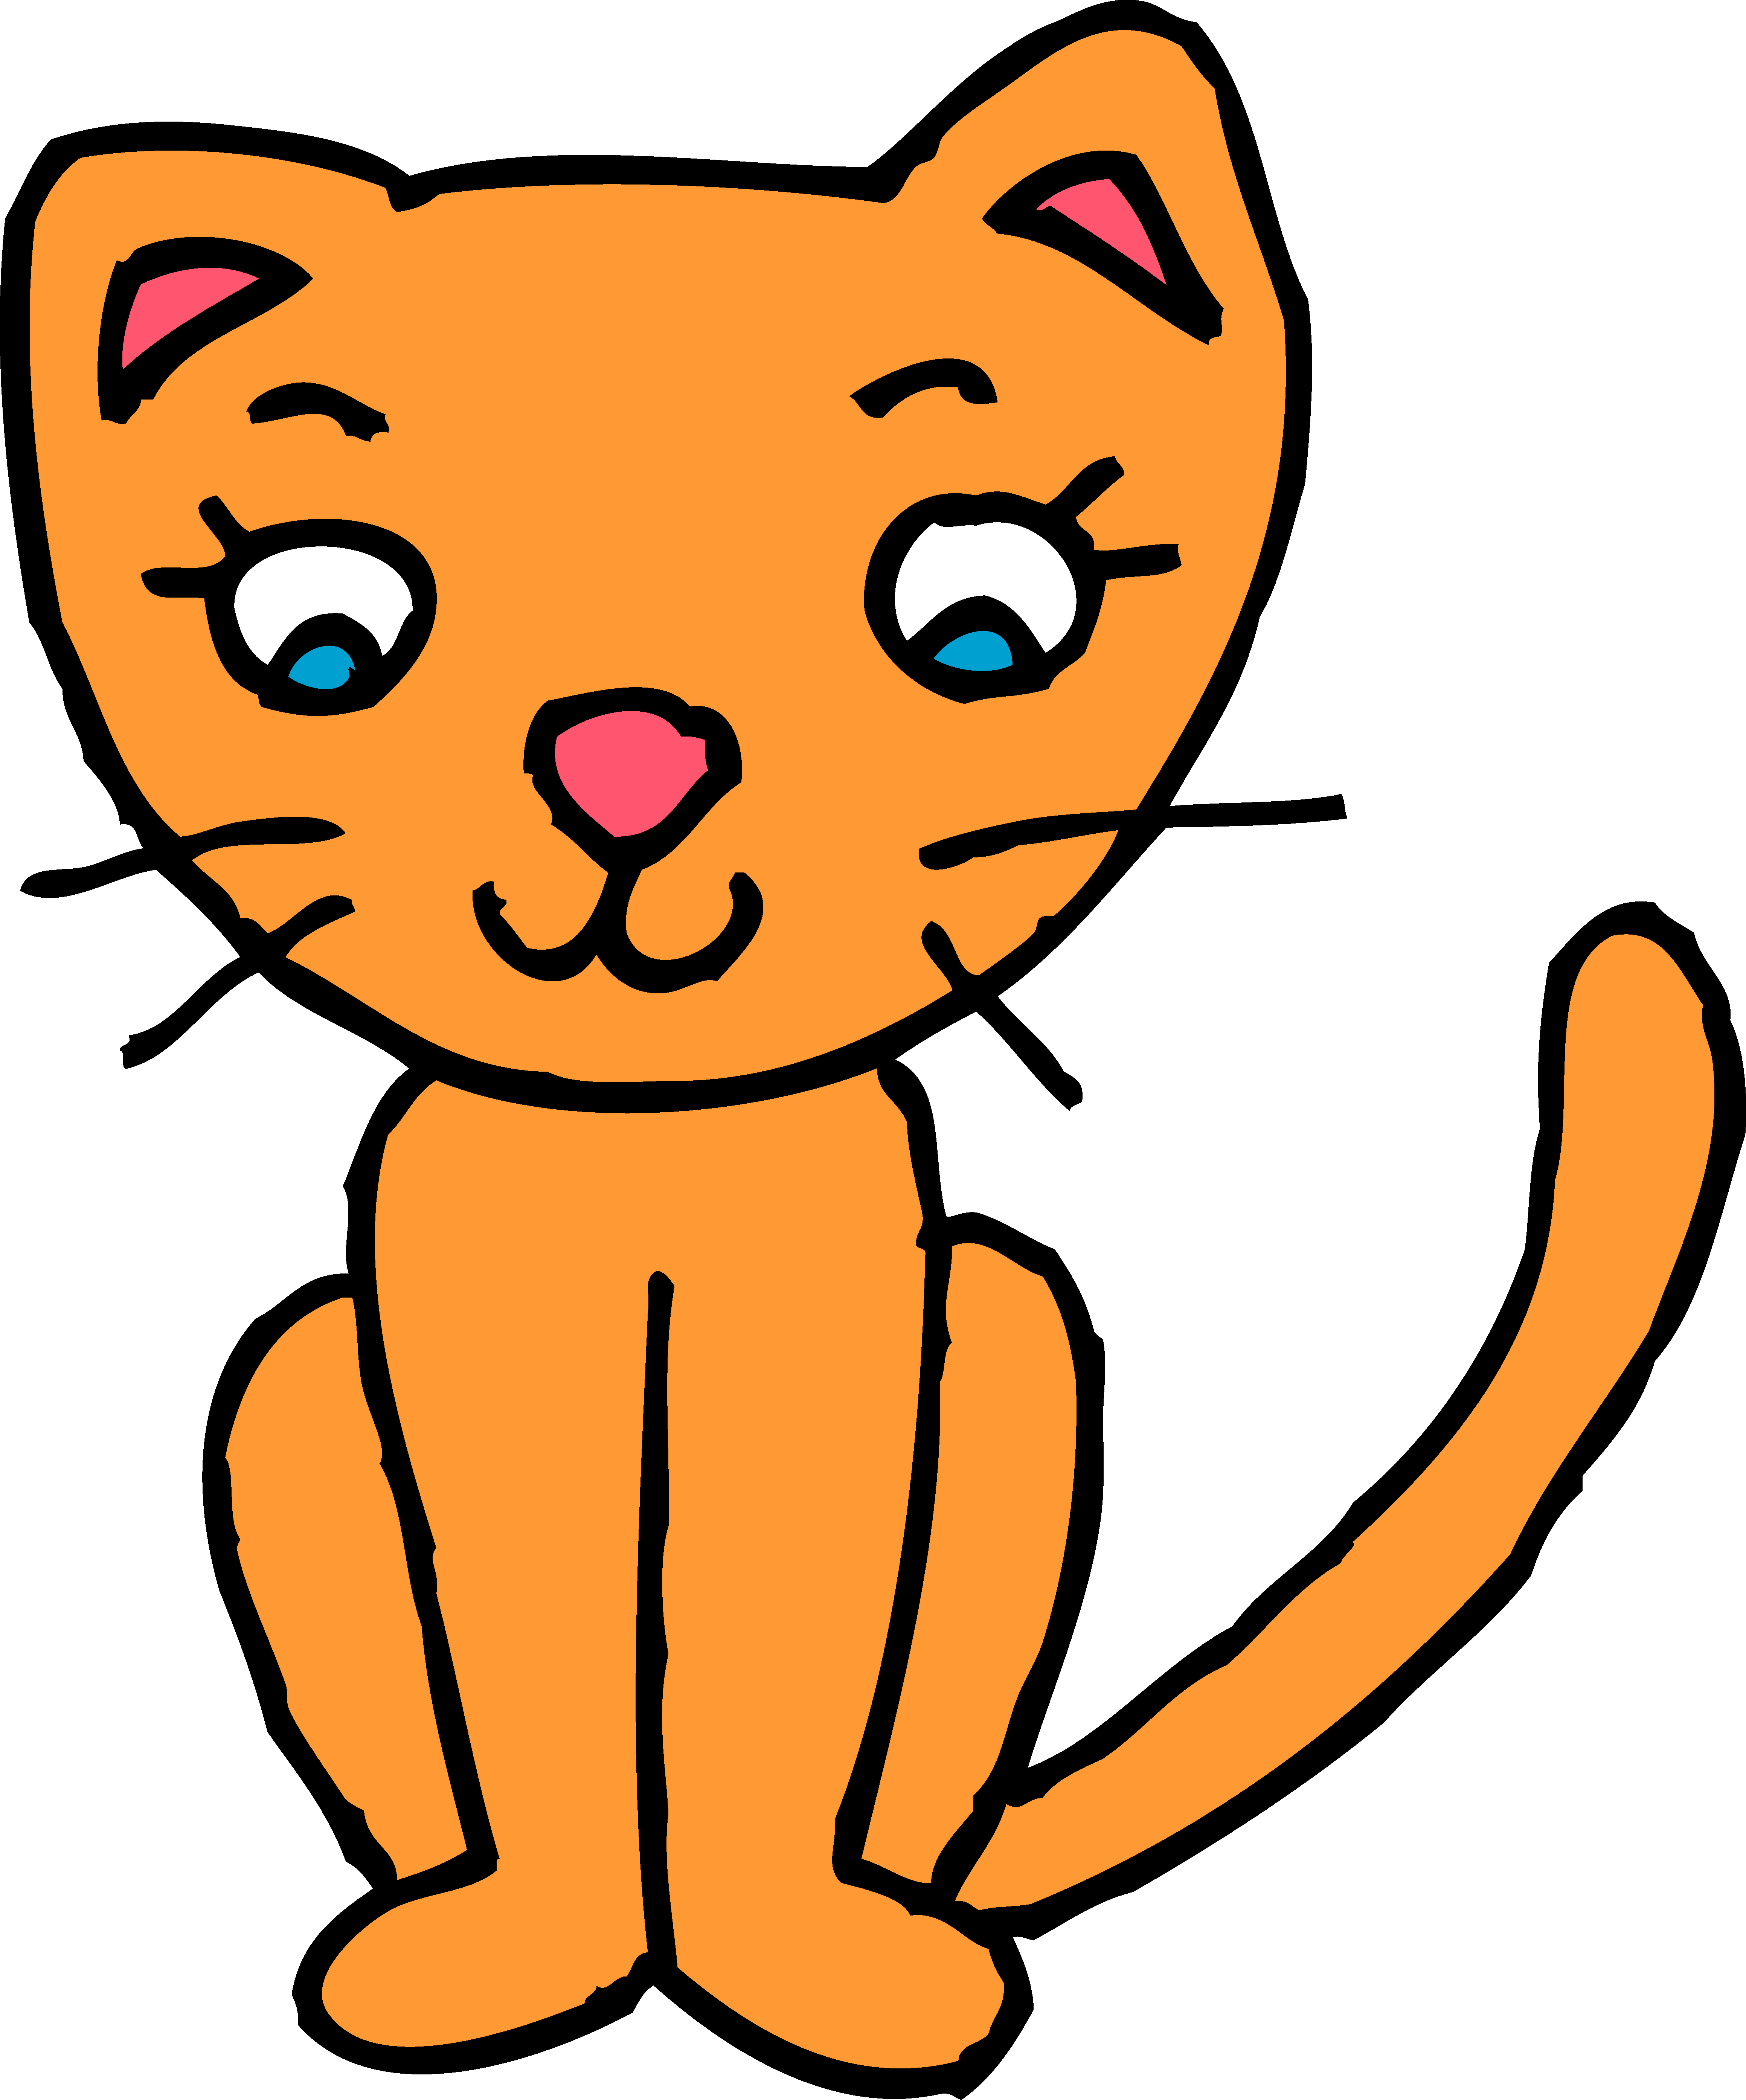 Cats Clip Art - Free Downloadable Images